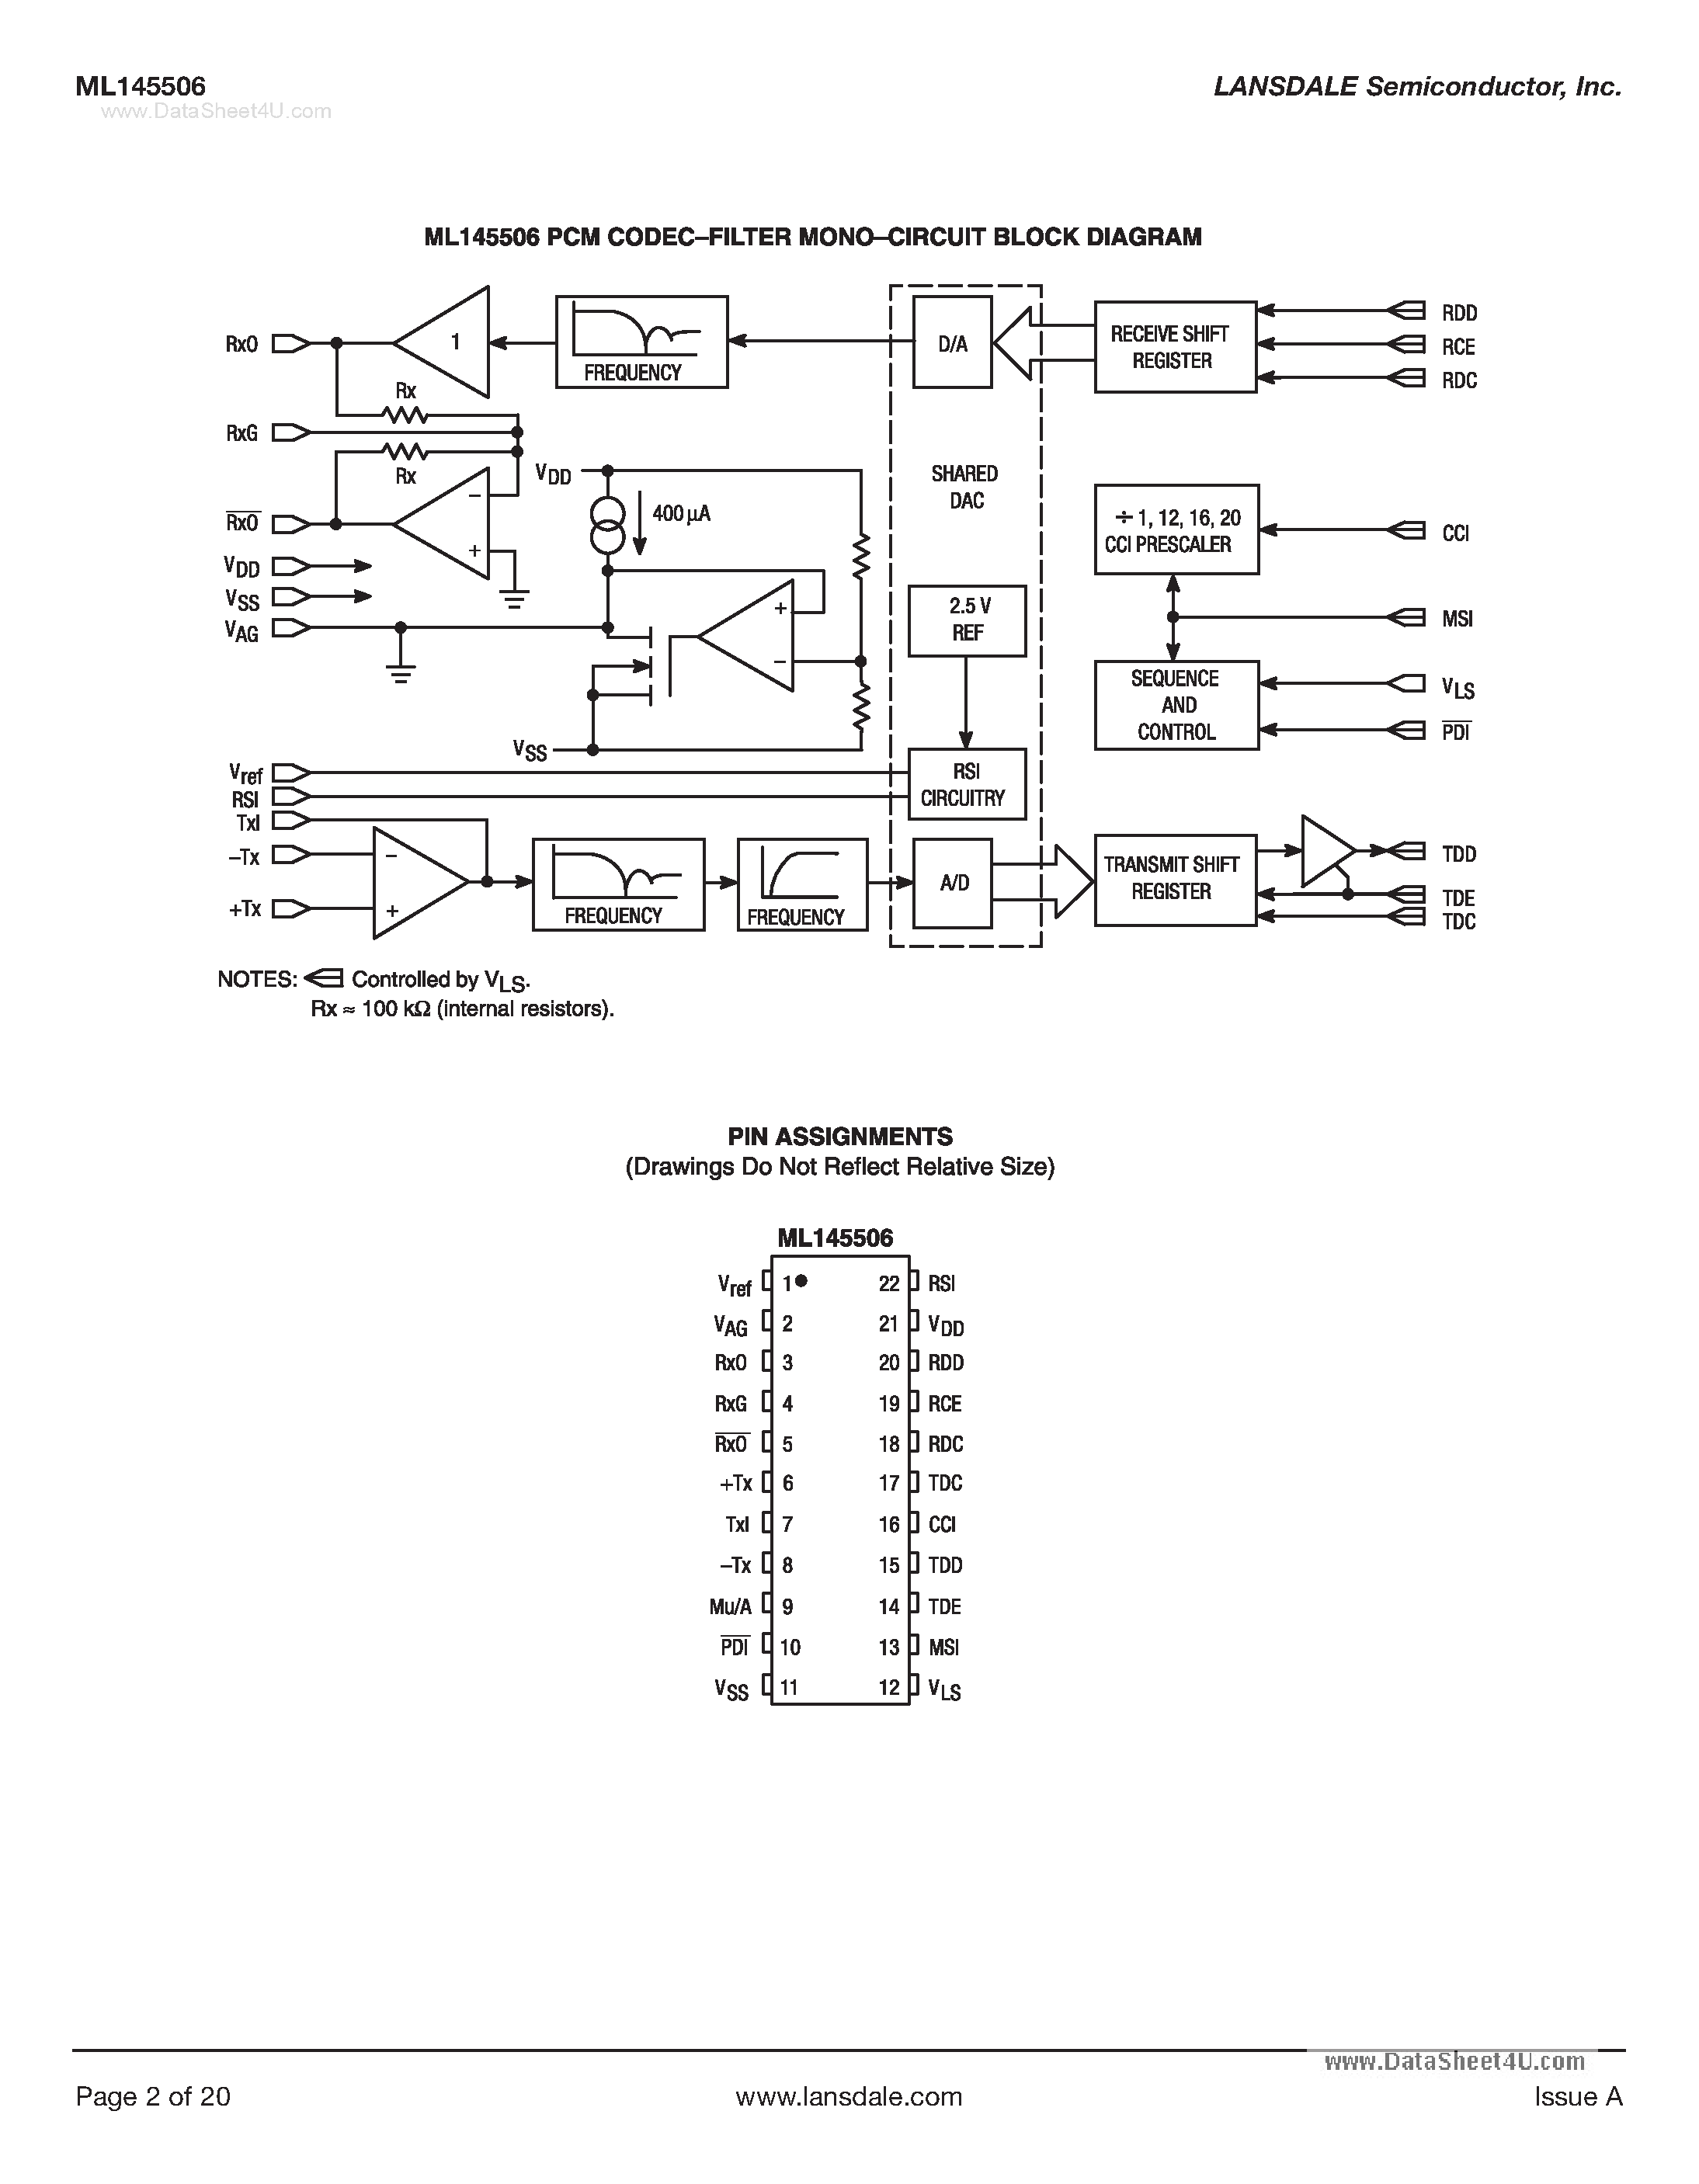 Даташит ML145506 - PCM Codec-Filter Mono-Circuit страница 2